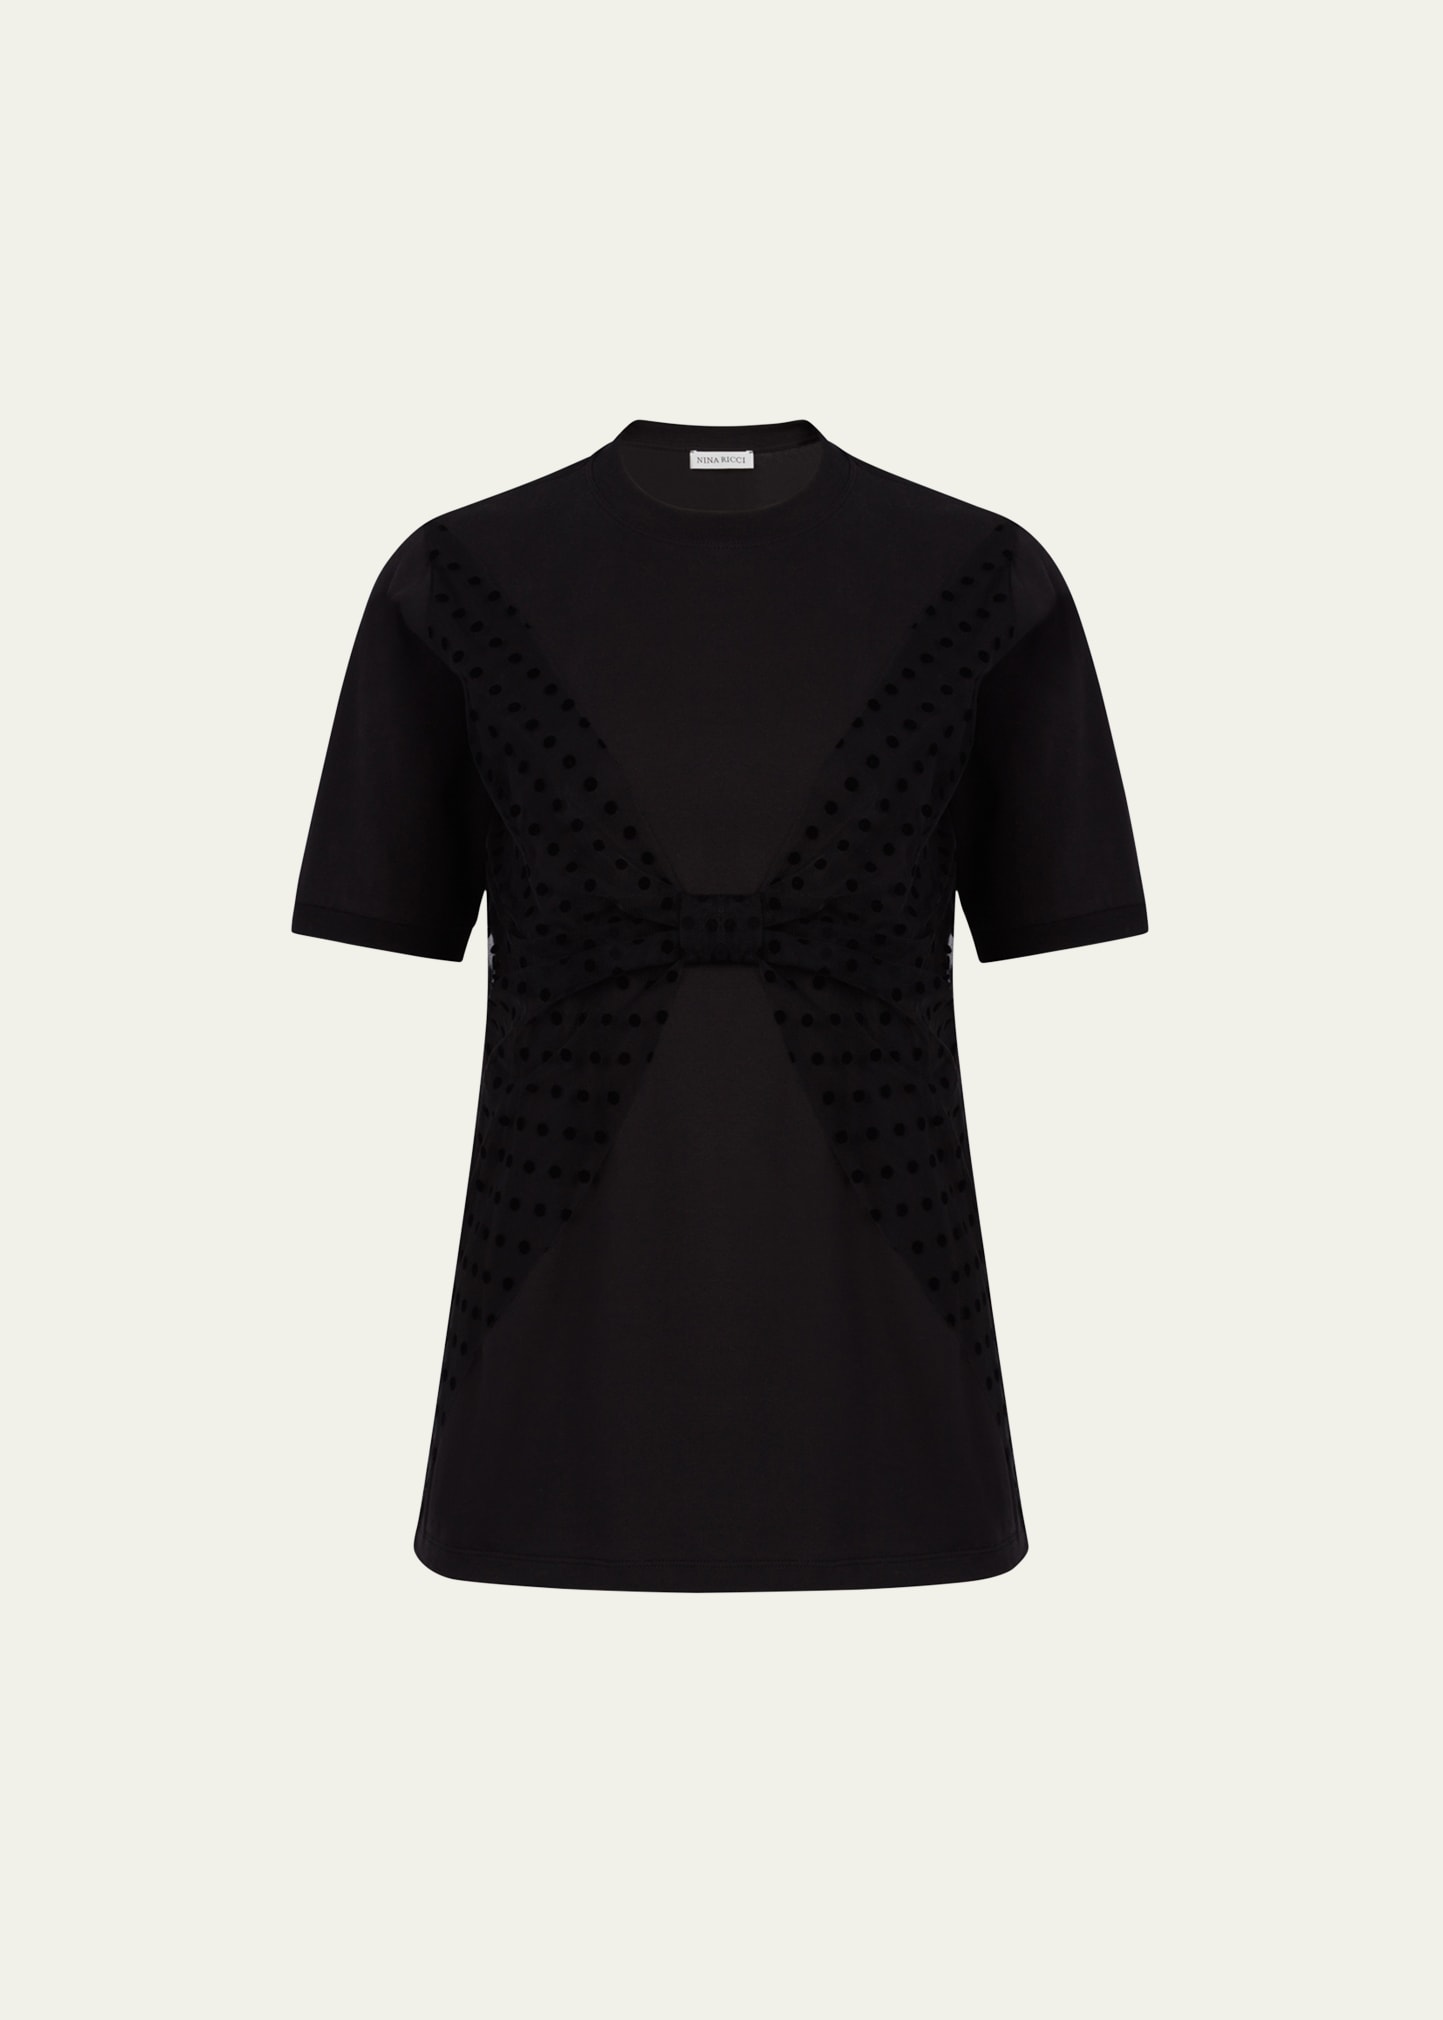 Nina Ricci T-shirt With Polka Dot Bow In U9000 Black